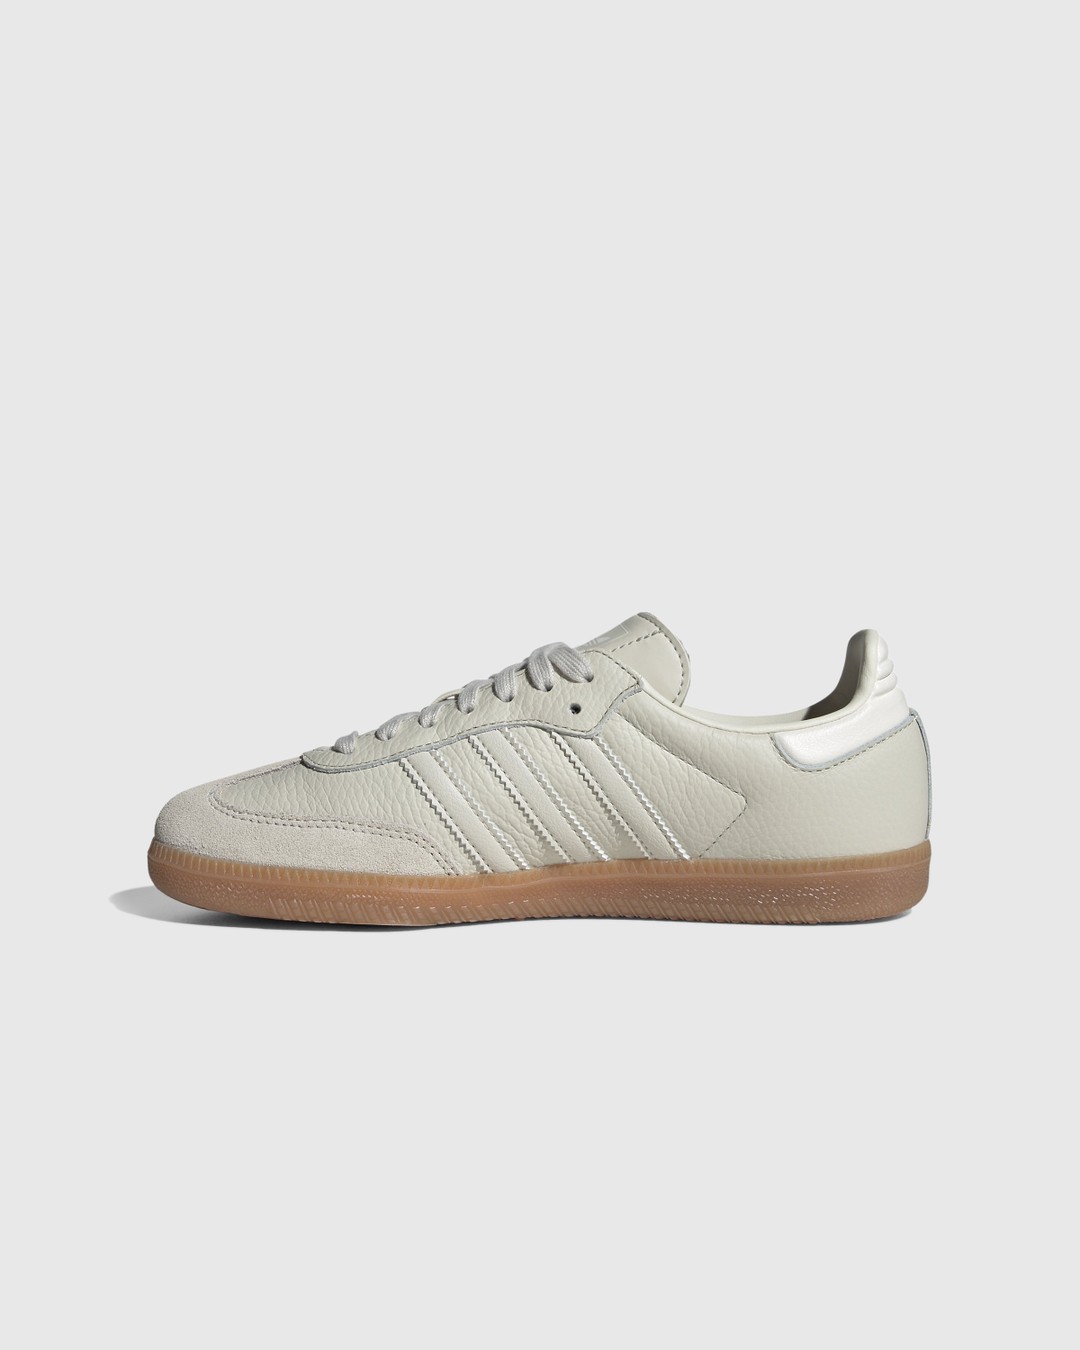 Adidas – Samba OG White/Aluminium - Sneakers - White - Image 2